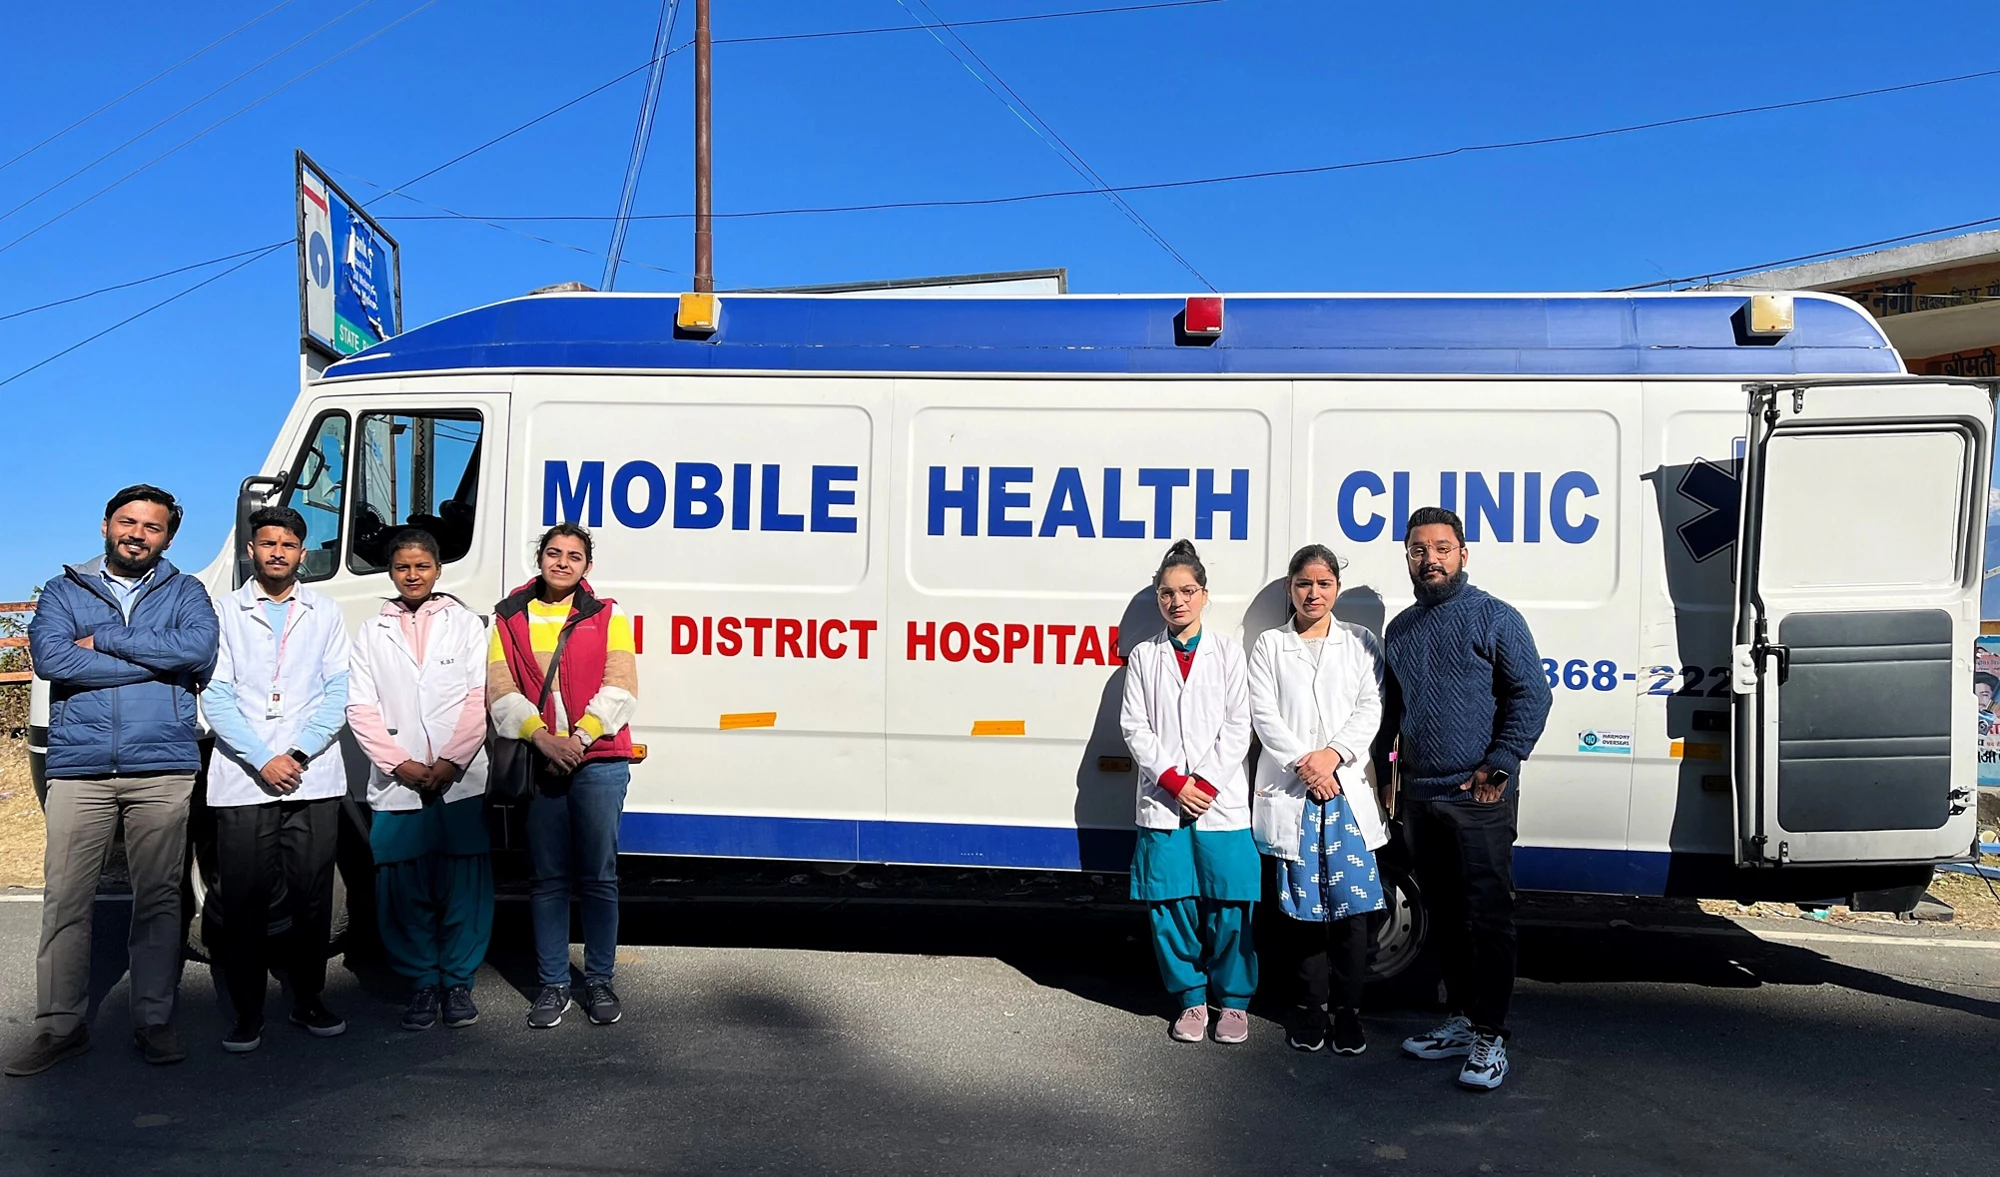 Bringing care closer: Mobile health vans equipped for remote medical assistance